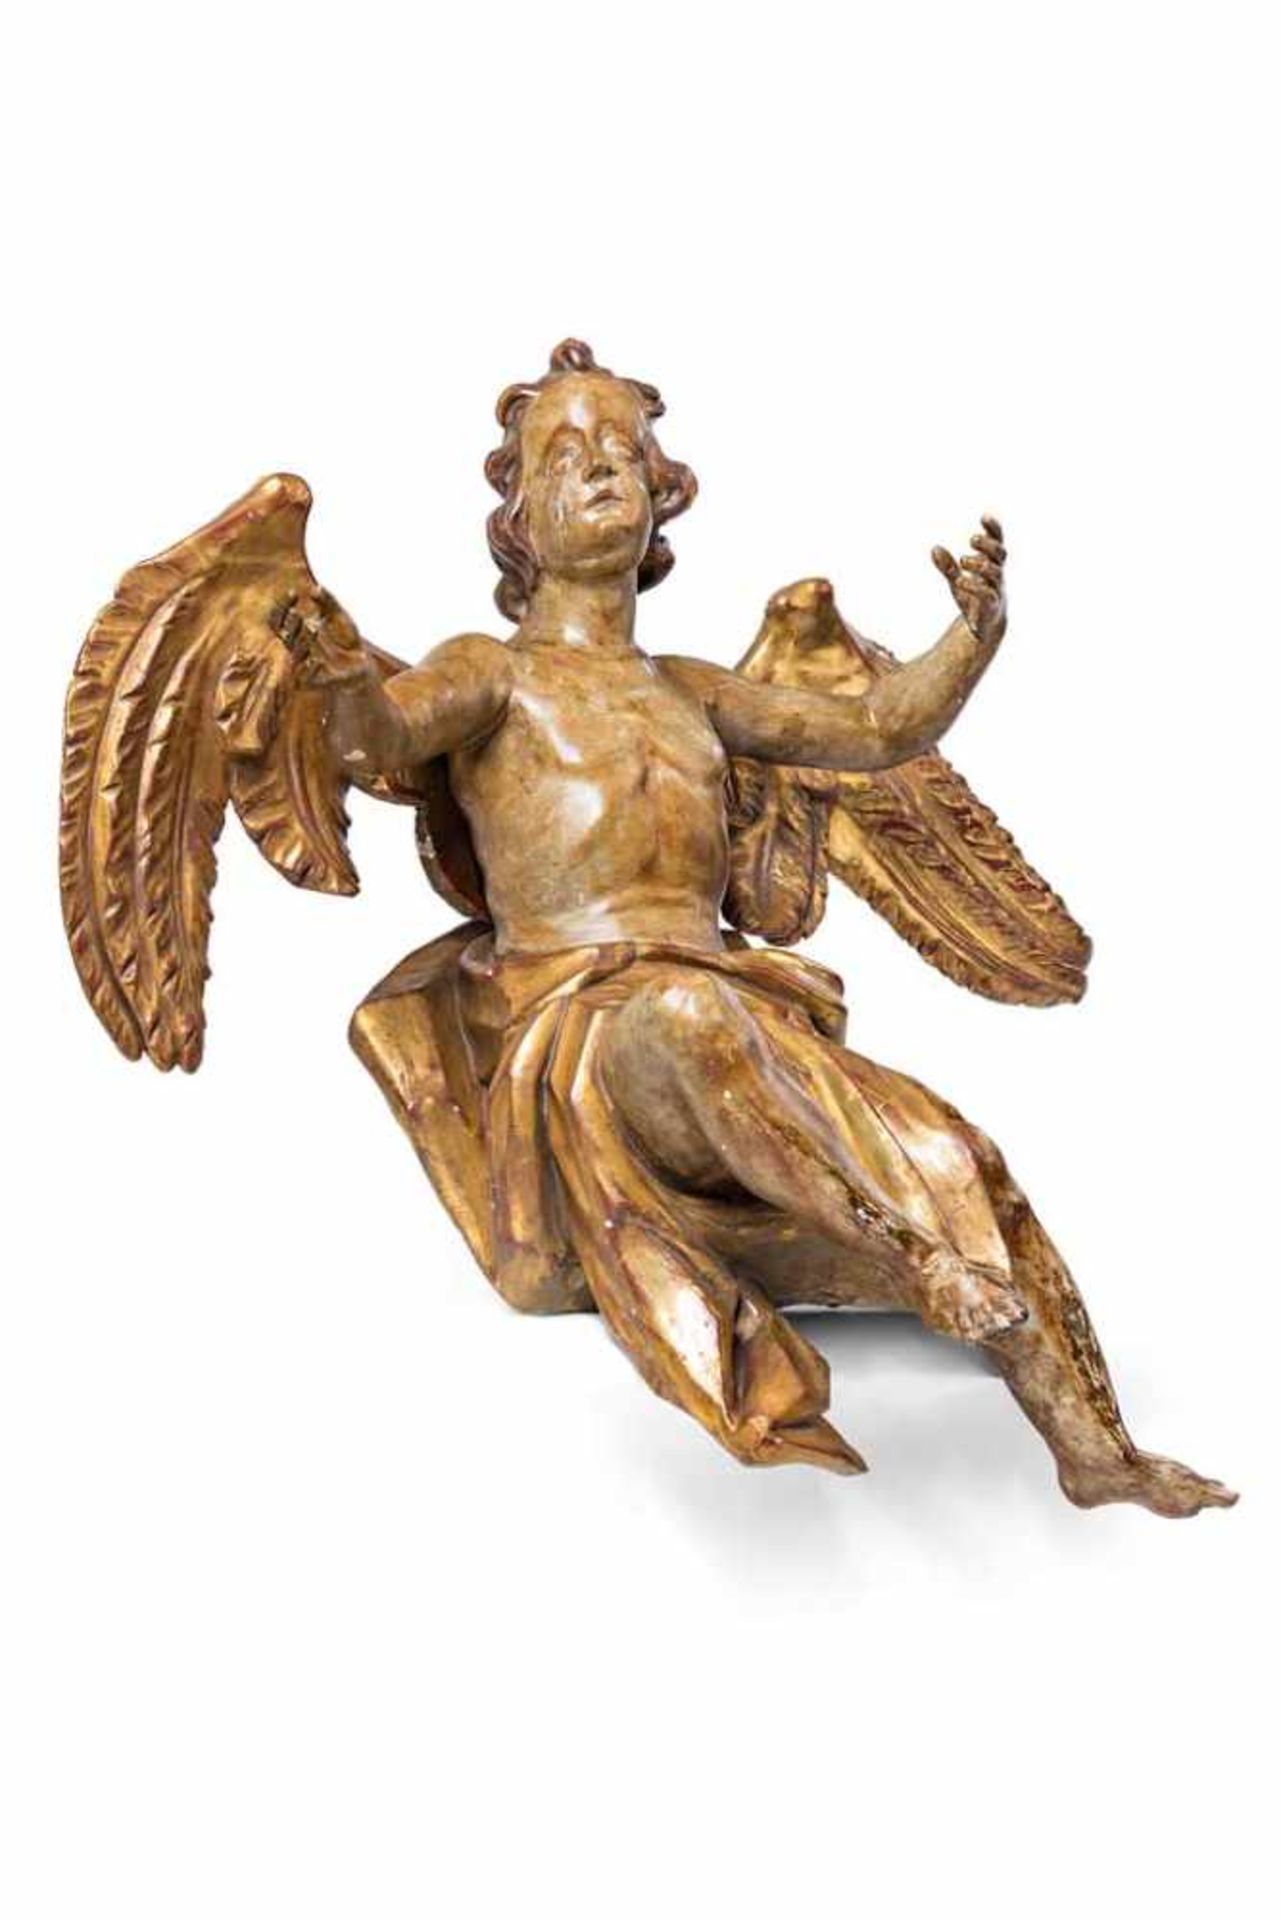 Großer barocker Engel. Holz gefasst und vergoldet. 19. Jh. H 82 cm